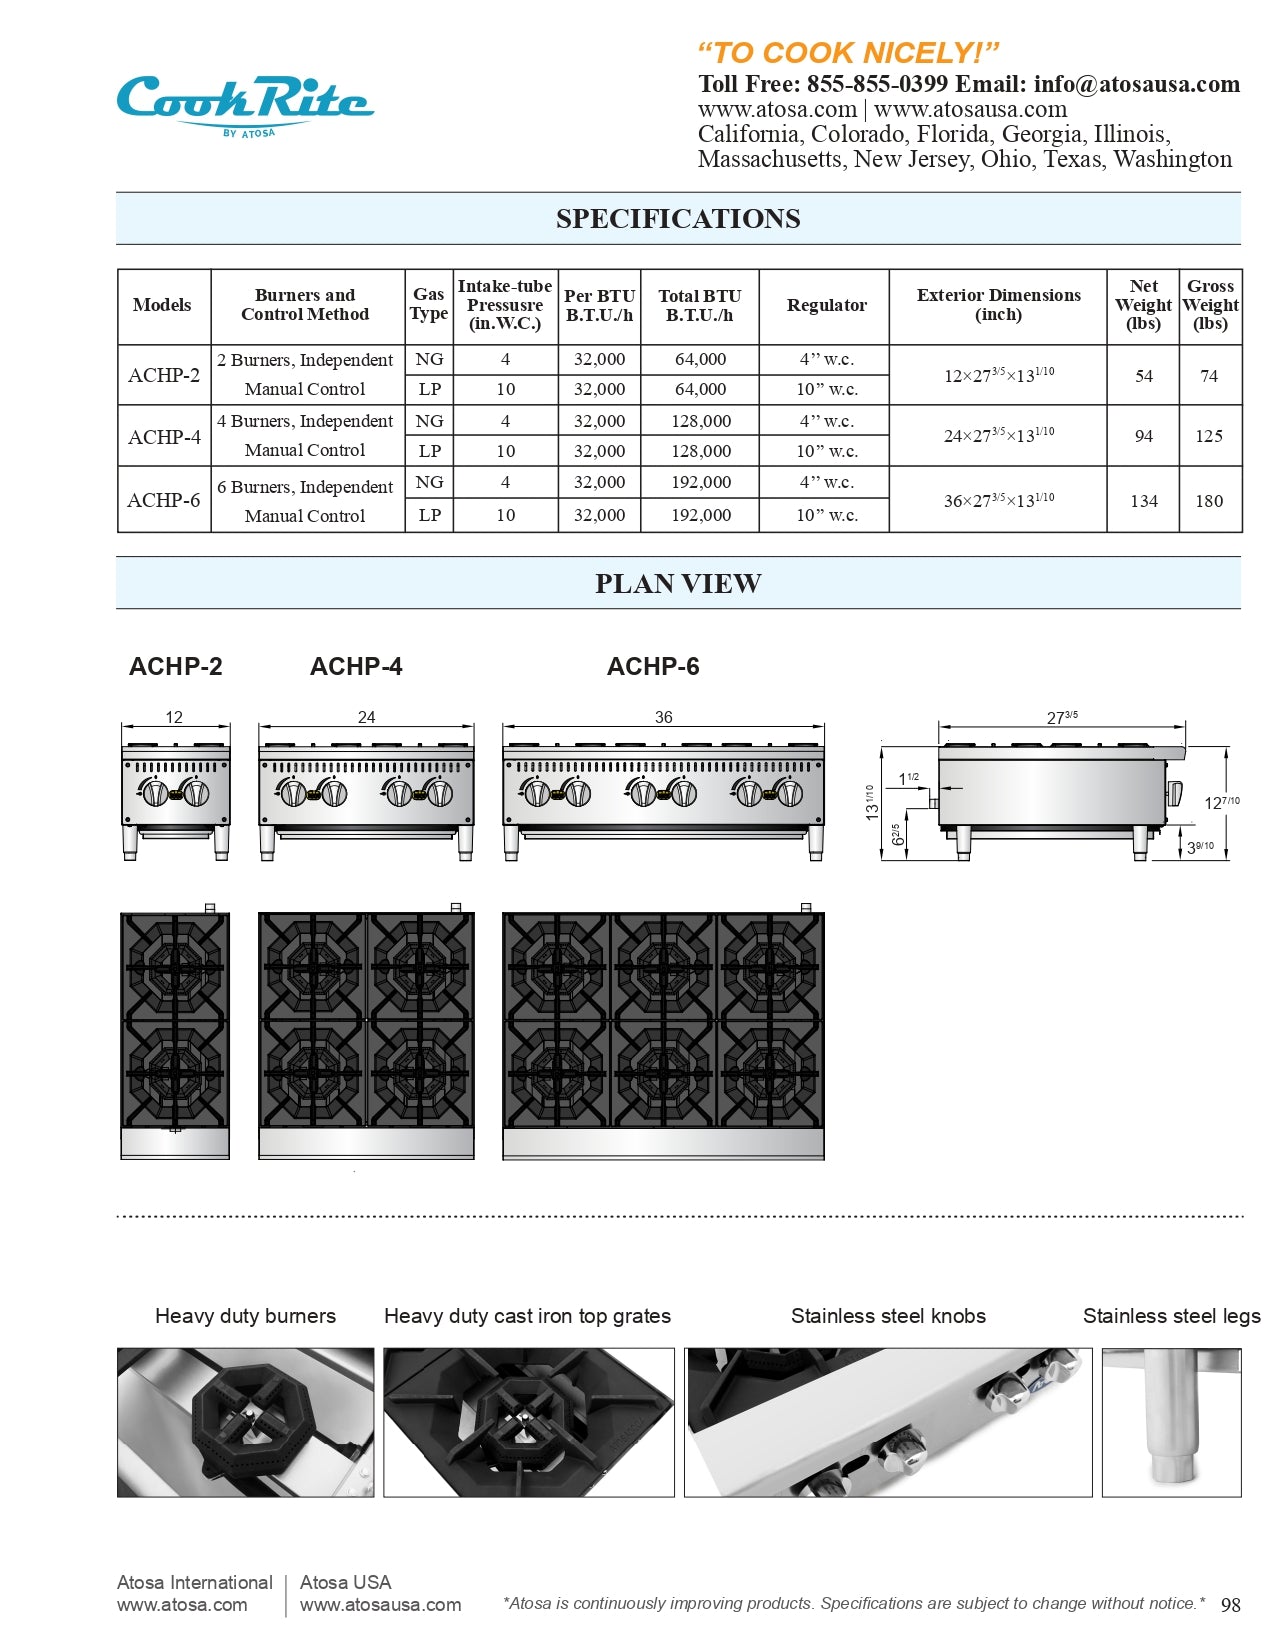 ACHP-6: Hotplate, Countertop, Gas